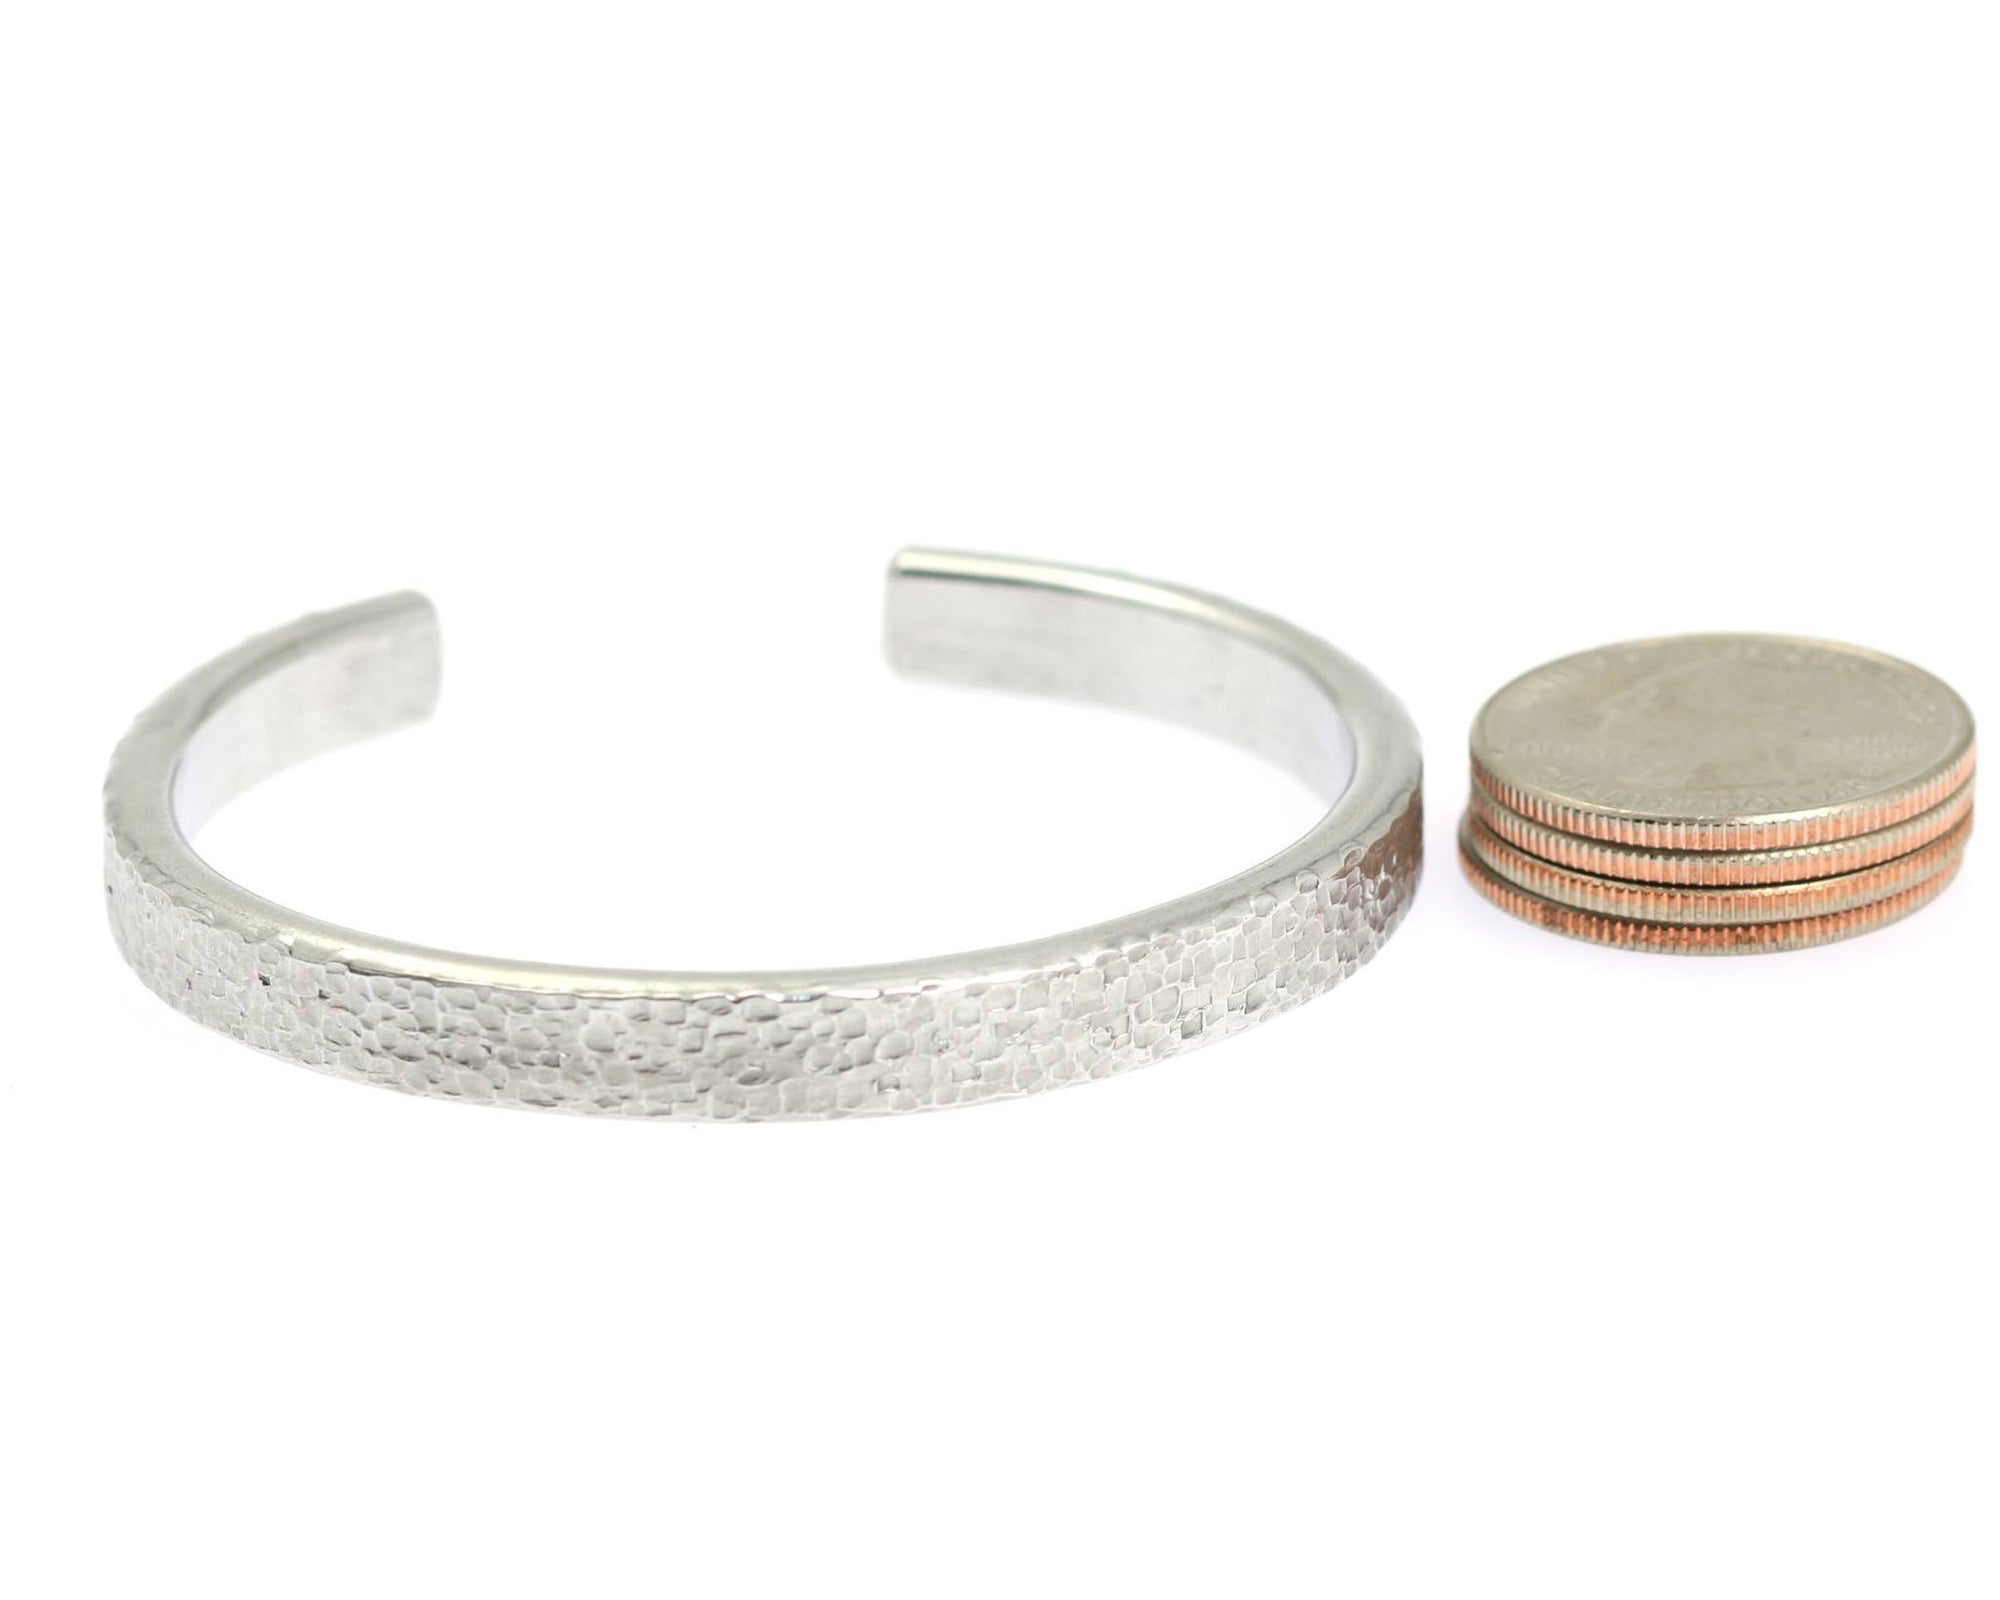 Width of Thin Texturized Aluminum Cuff Bracelet